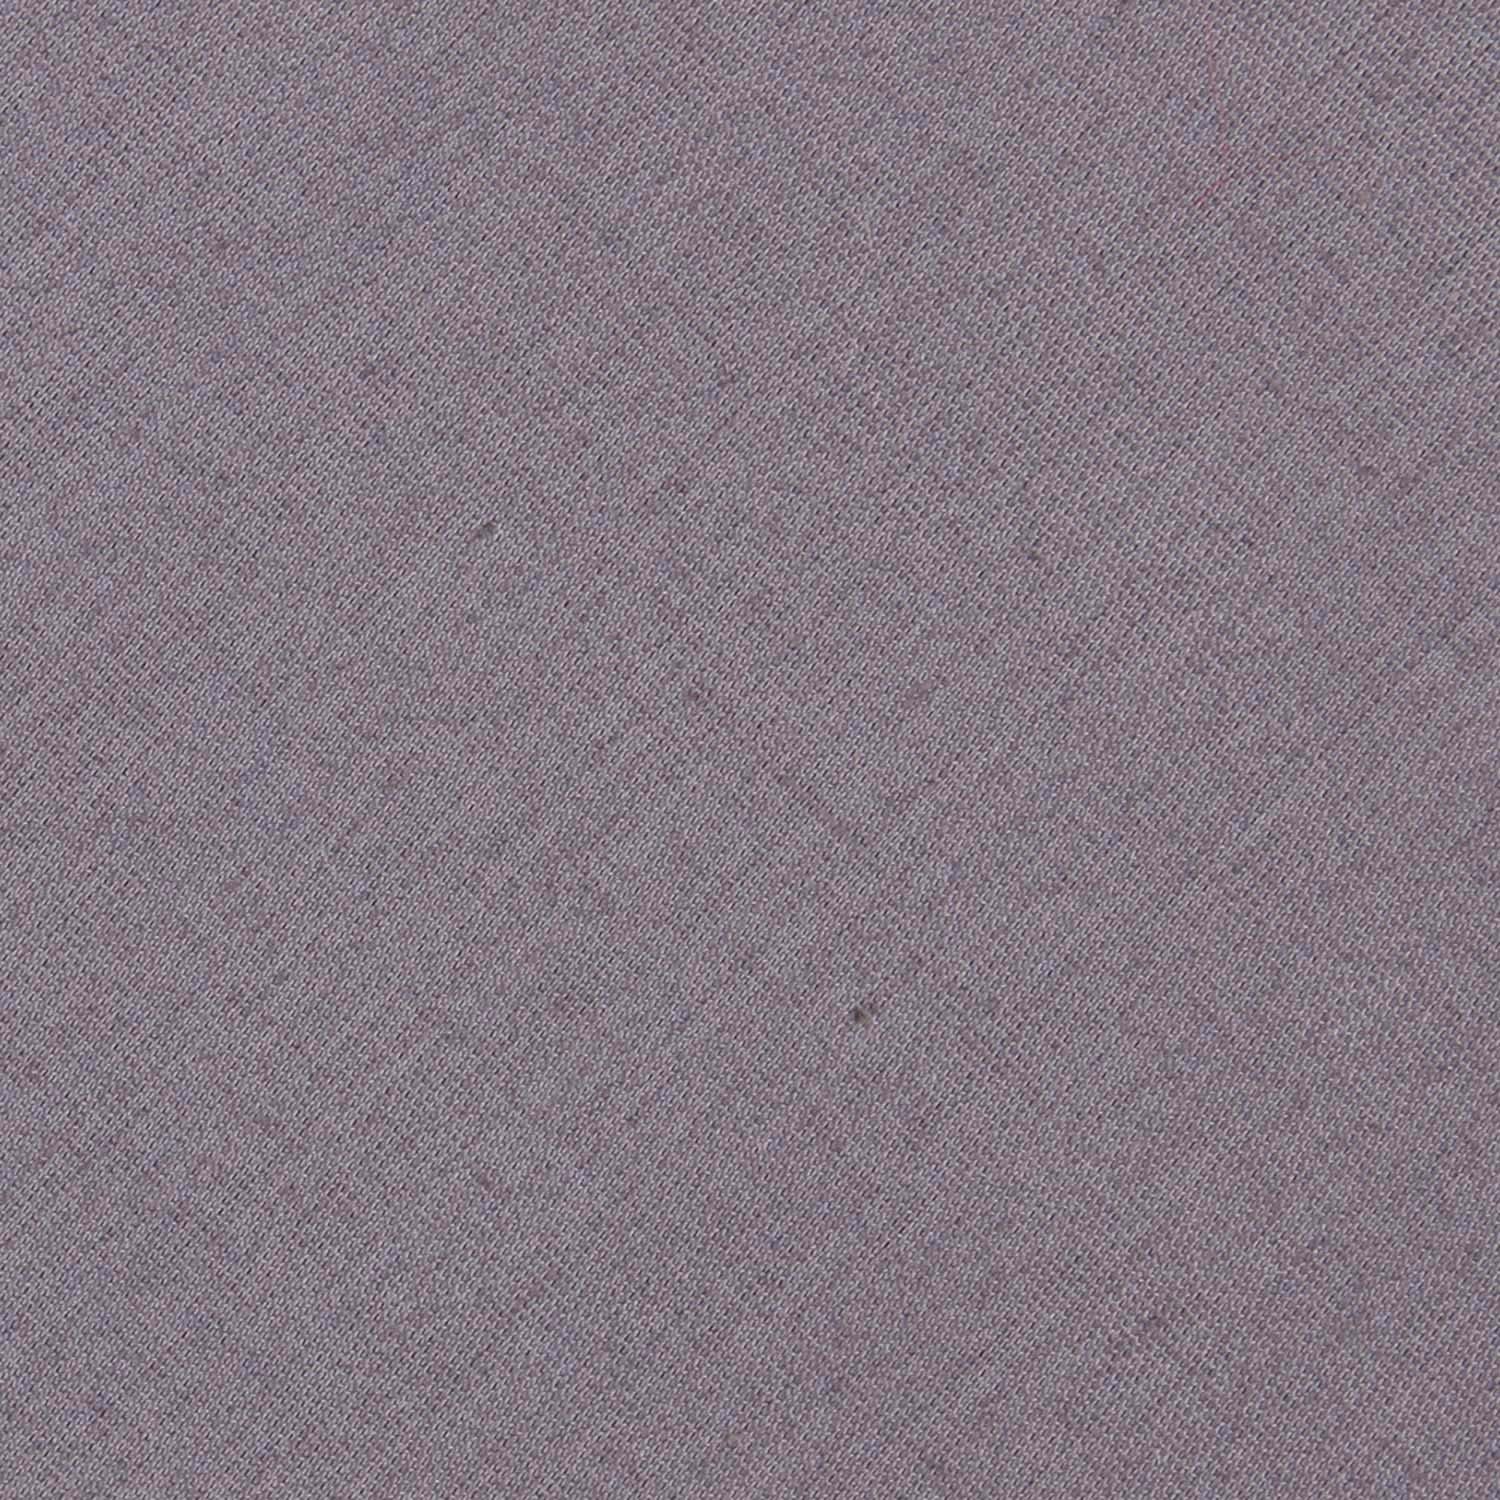 Charcoal Grey Cotton Fabric Self Tie Diamond Tip Bow TieC159